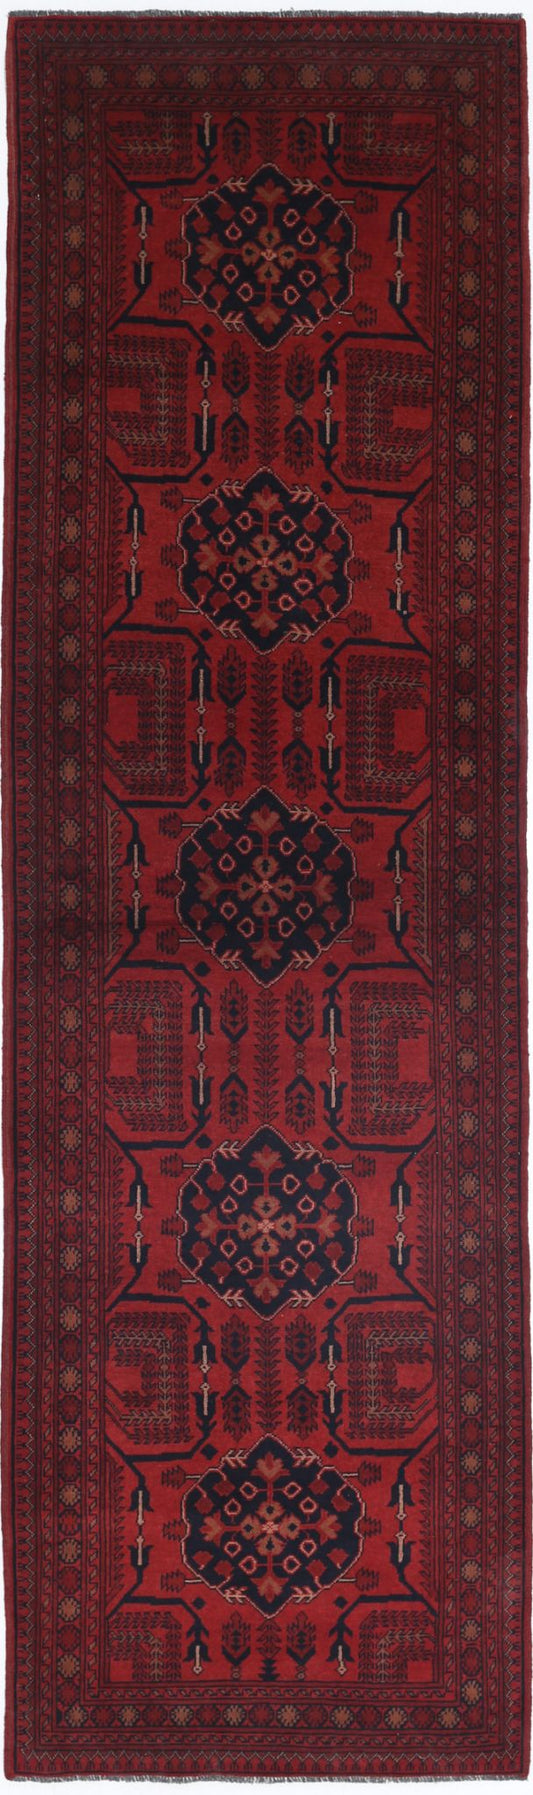 Hand Knotted Afghan Khamyab Wool Rug - 2'8'' x 9'5''